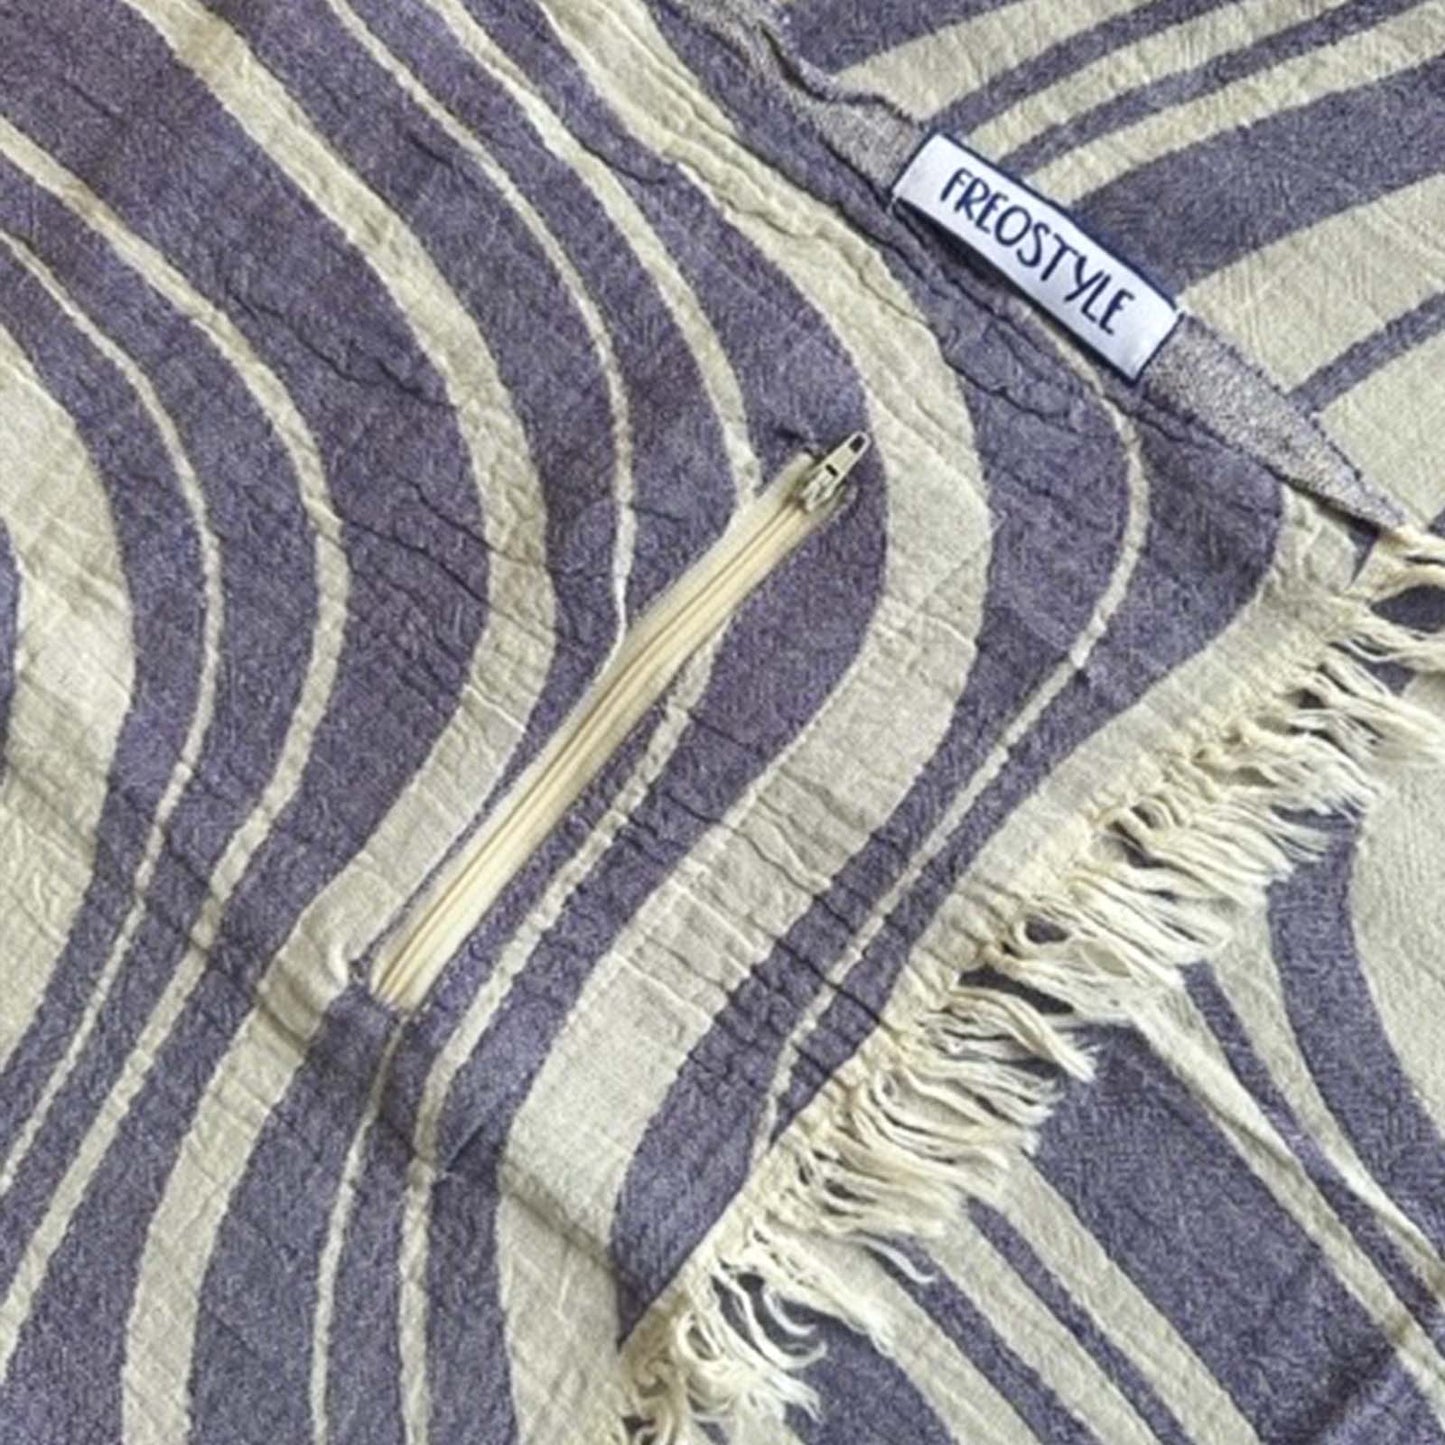 Purple Haze Turkish Towel with Pockets, close up of pocket